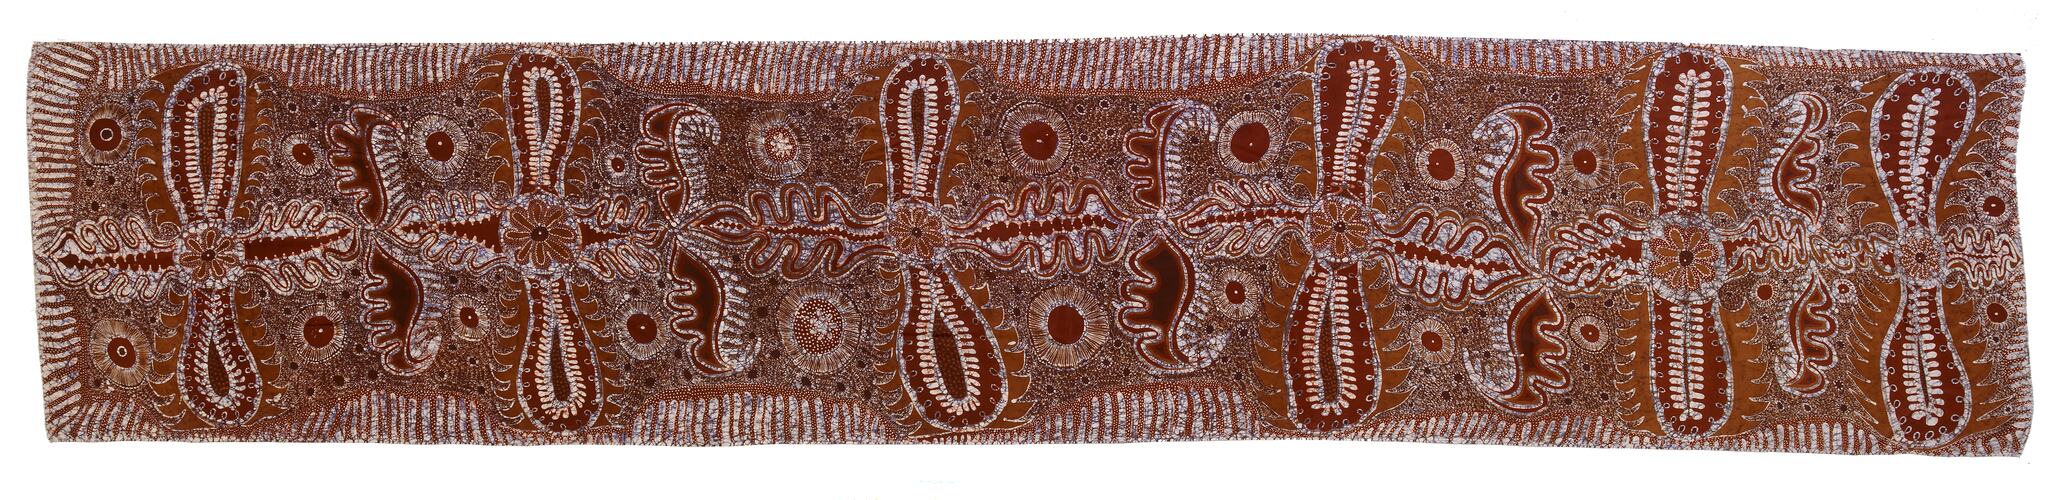 Silk twill batik (verso), Ernabella, South Australia, c.1988.